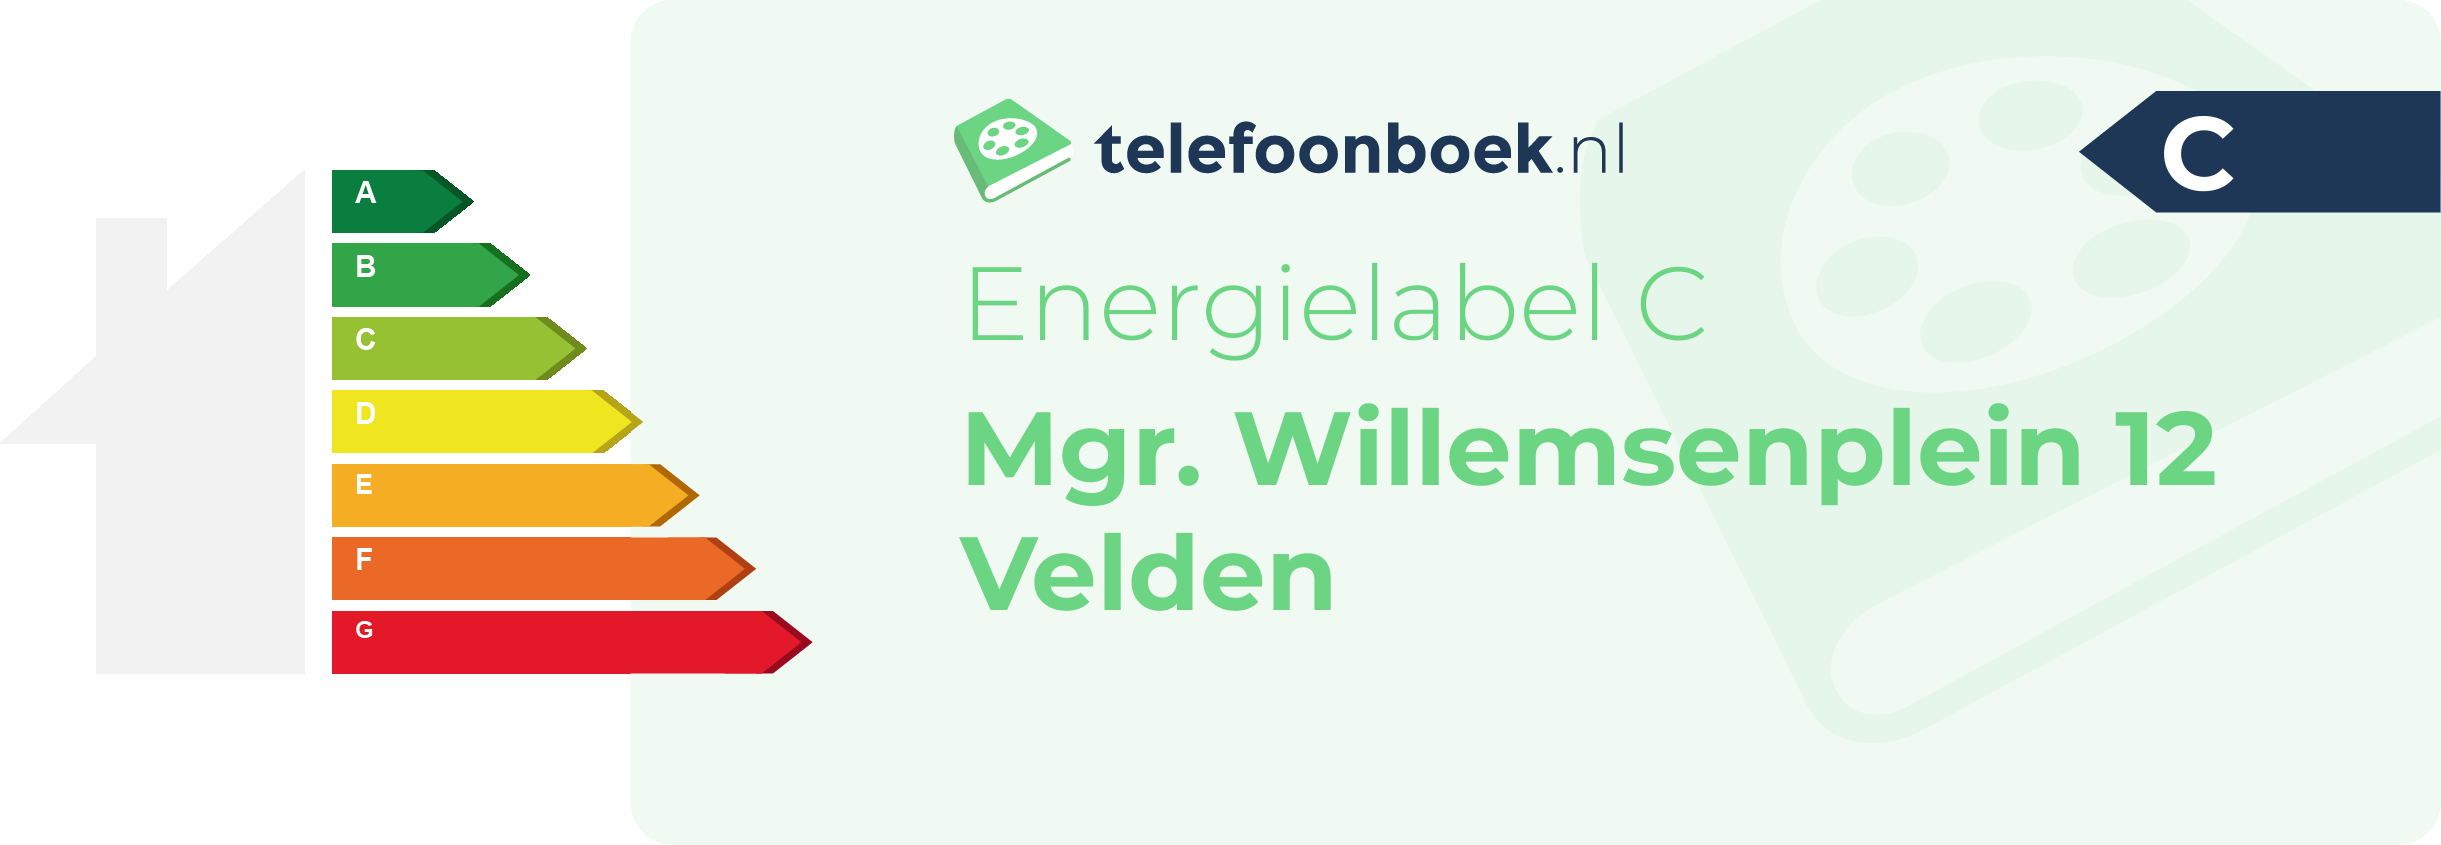 Energielabel Mgr. Willemsenplein 12 Velden